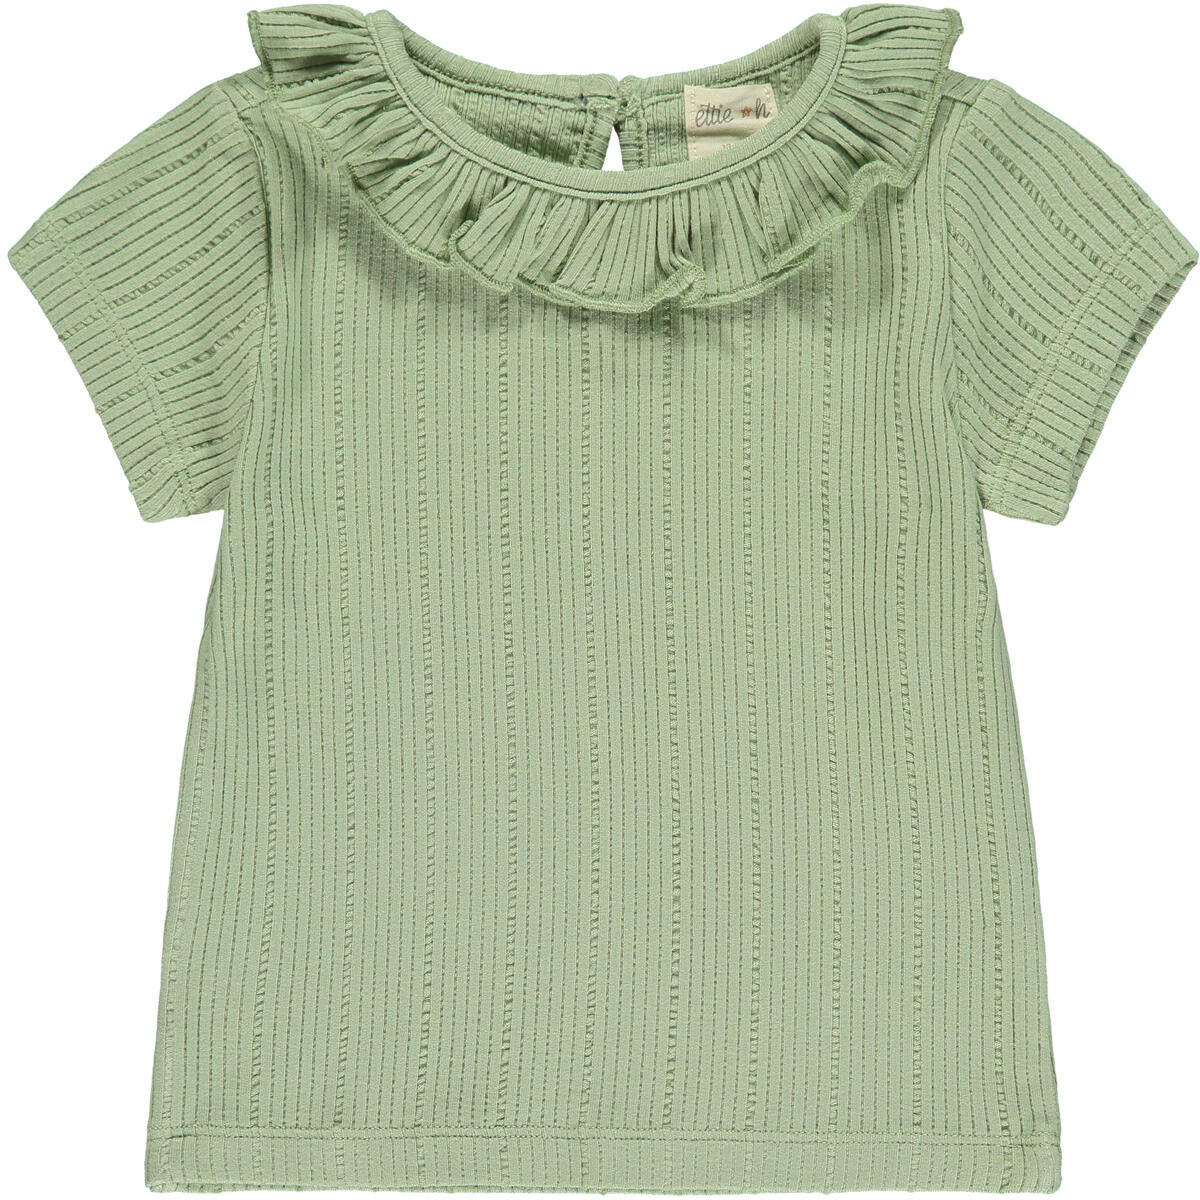 ettie and h Sophia shirt sage cotton t-shirt, green cotton, short sleeve, little girls, baby girls, cotton, flowy